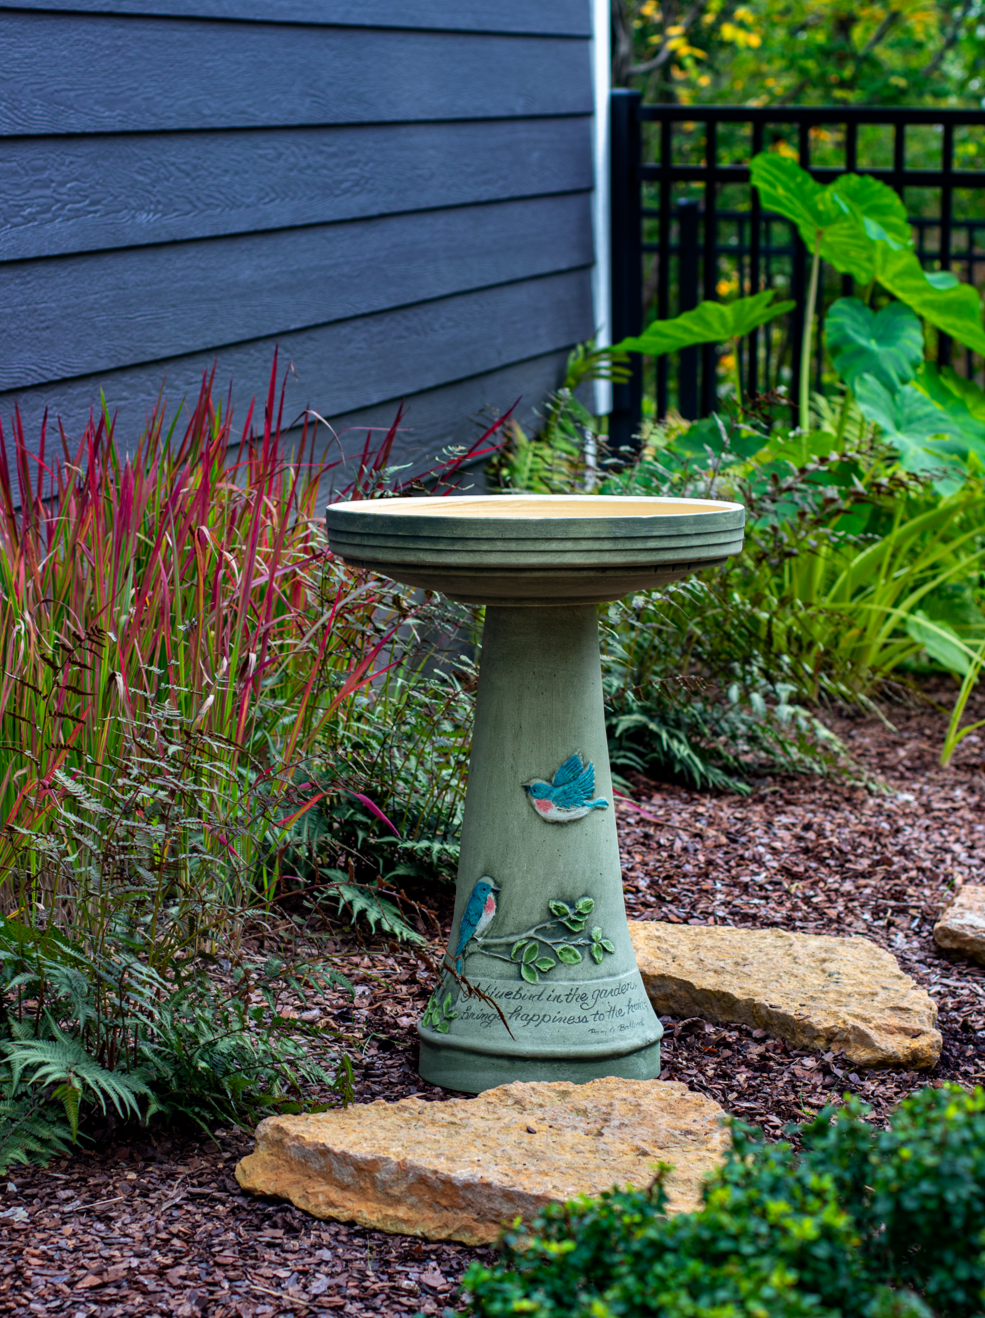 ceramic birdbath set with hand painted bluebird design and saying in landscaped garden area